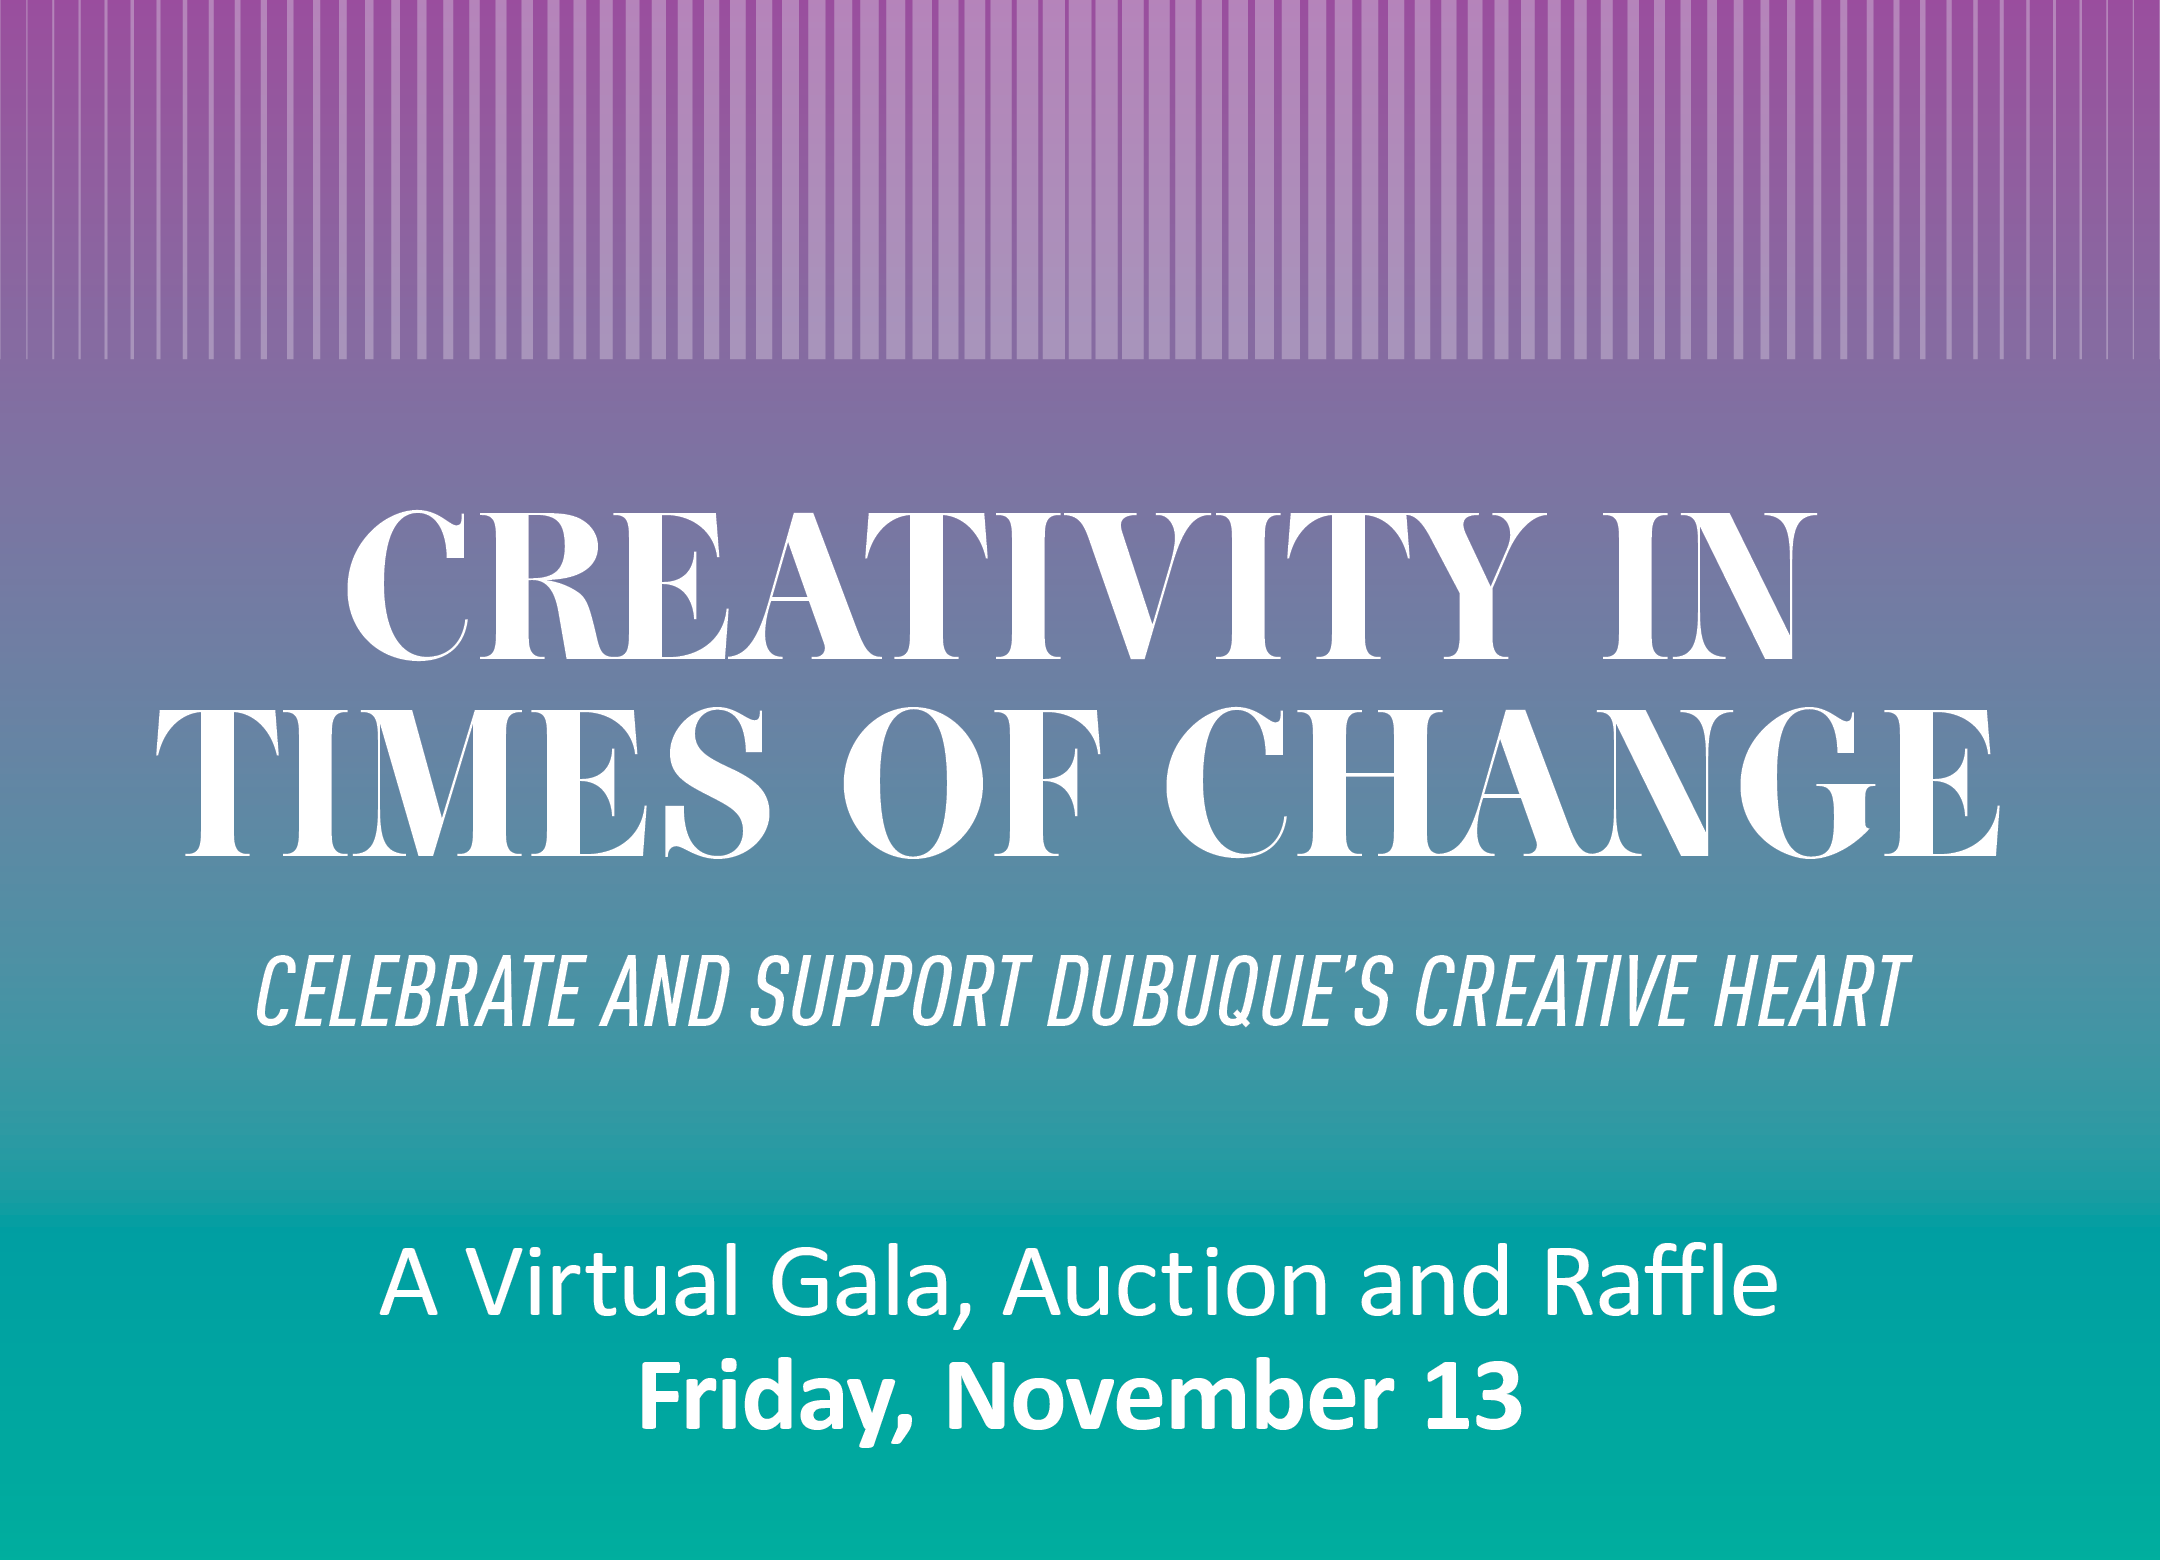 Creativity in Times of Change, A Virtual Gala, Friday, November 13